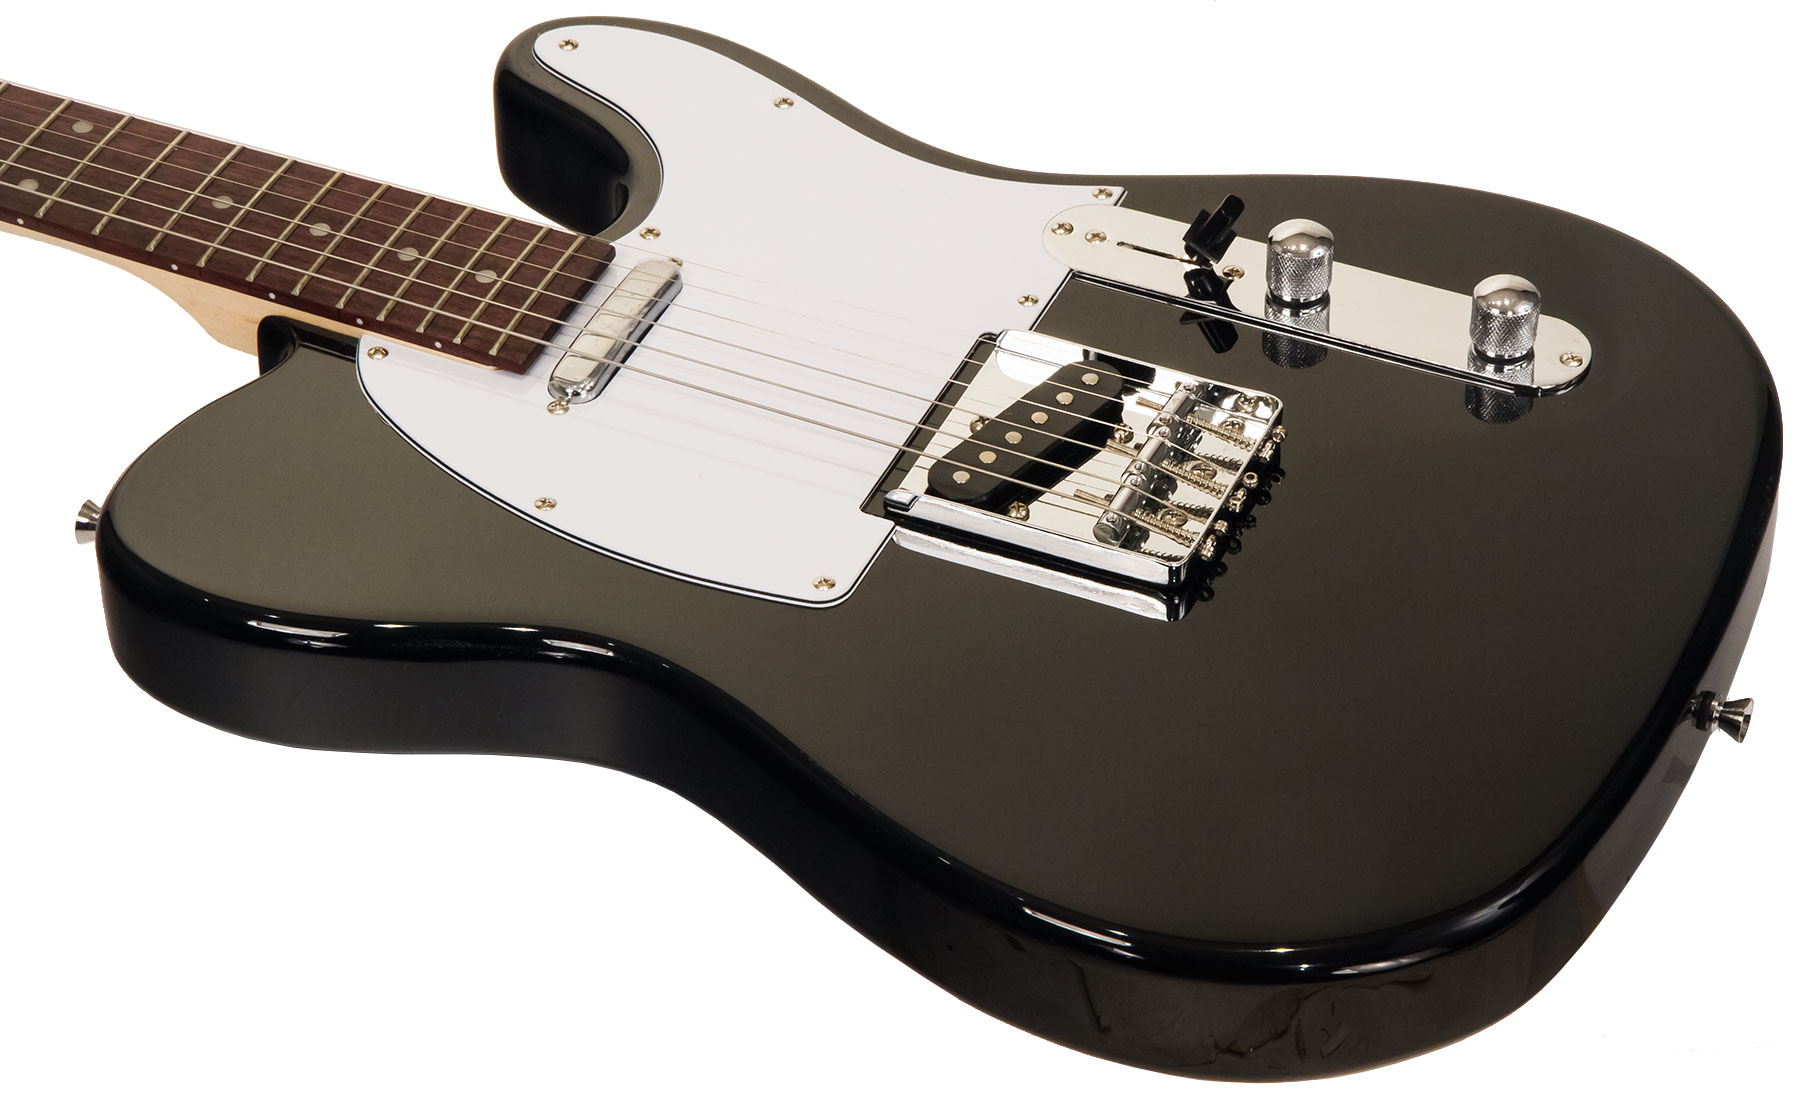 Eastone Tl70 Ss Ht Pur - Black - Tel shape electric guitar - Variation 2